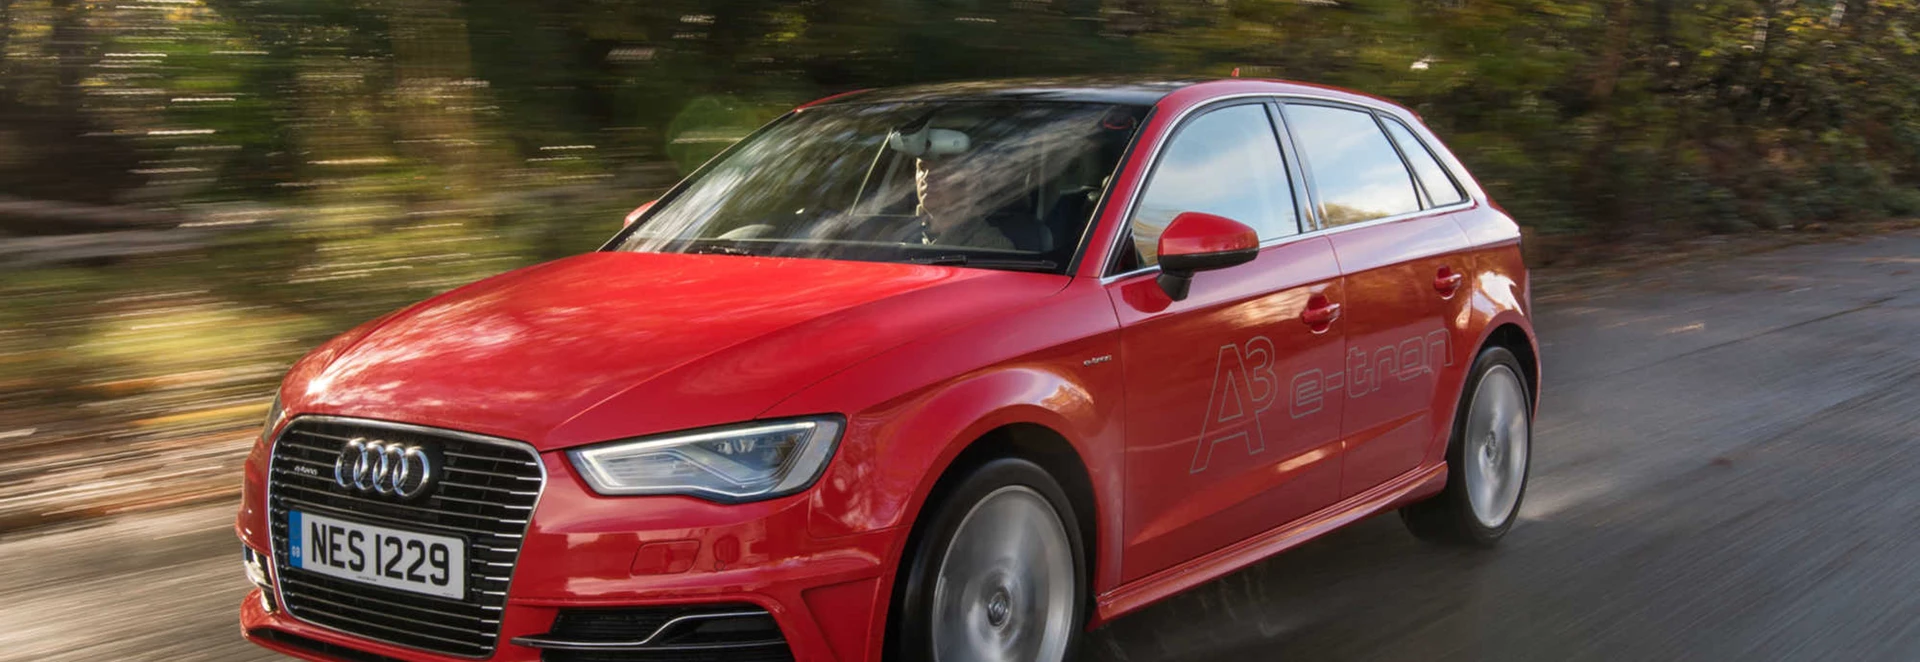 Audi A3 Sportback e-tron hatchback review 